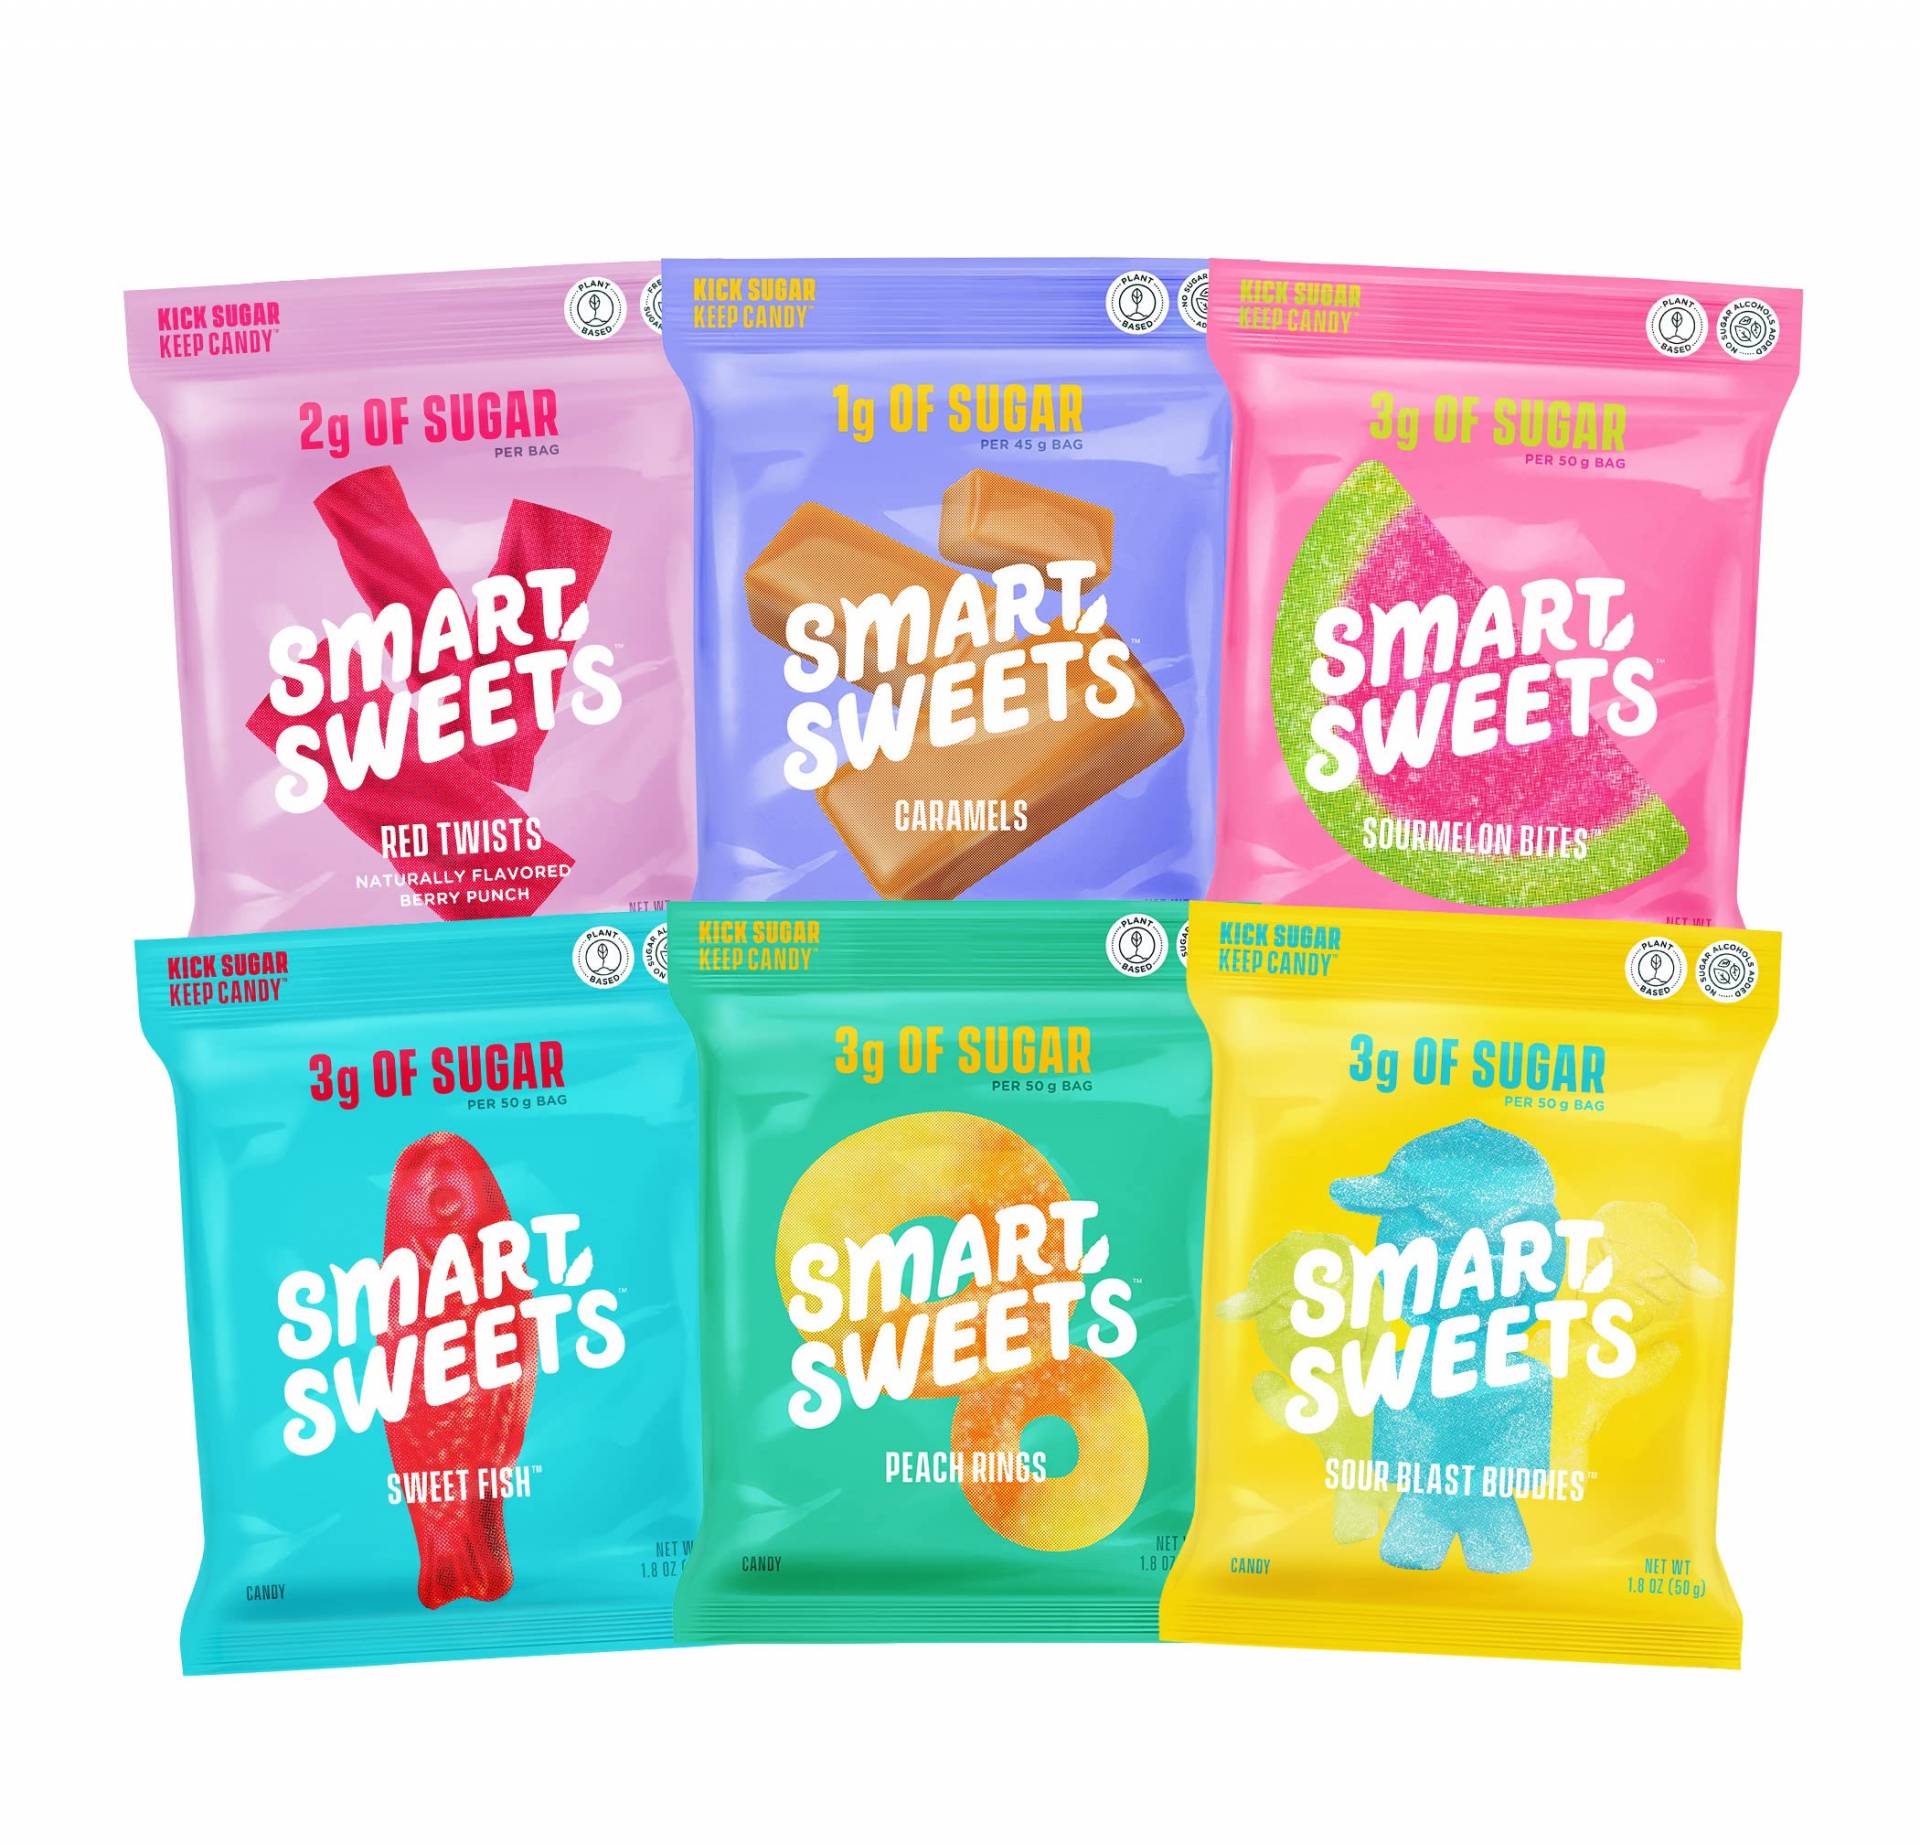 Smart Sweets - $3.99